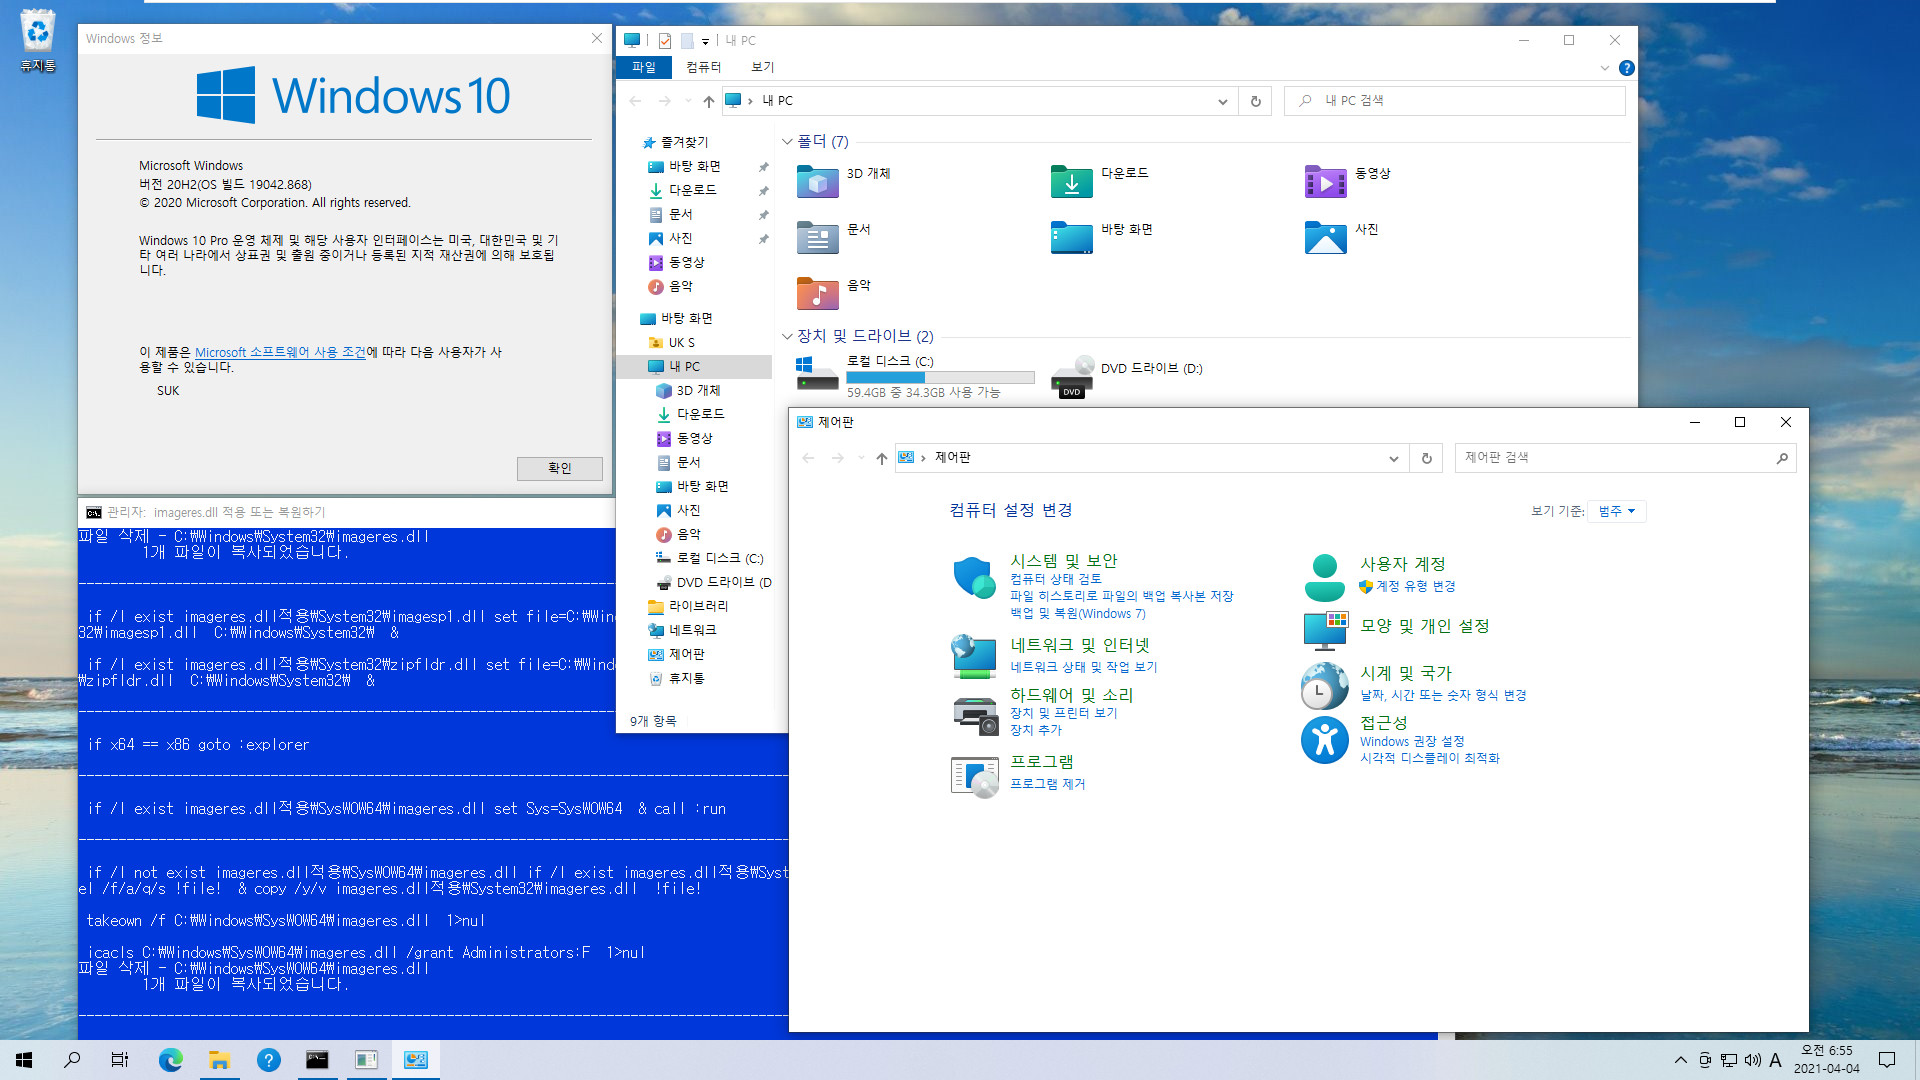 imageres.dll 윈도우 10 버전 1809용 파일이고 윈도우 7 라이브러리 안에 폴더 아이콘들이 정상 표시되기 때문에 윈도우 7 종료와 부팅 배경화면만 정상 표시되도록 7 원본 imageres.dll을 합쳐서 테스트 2021-04-04_065528.jpg